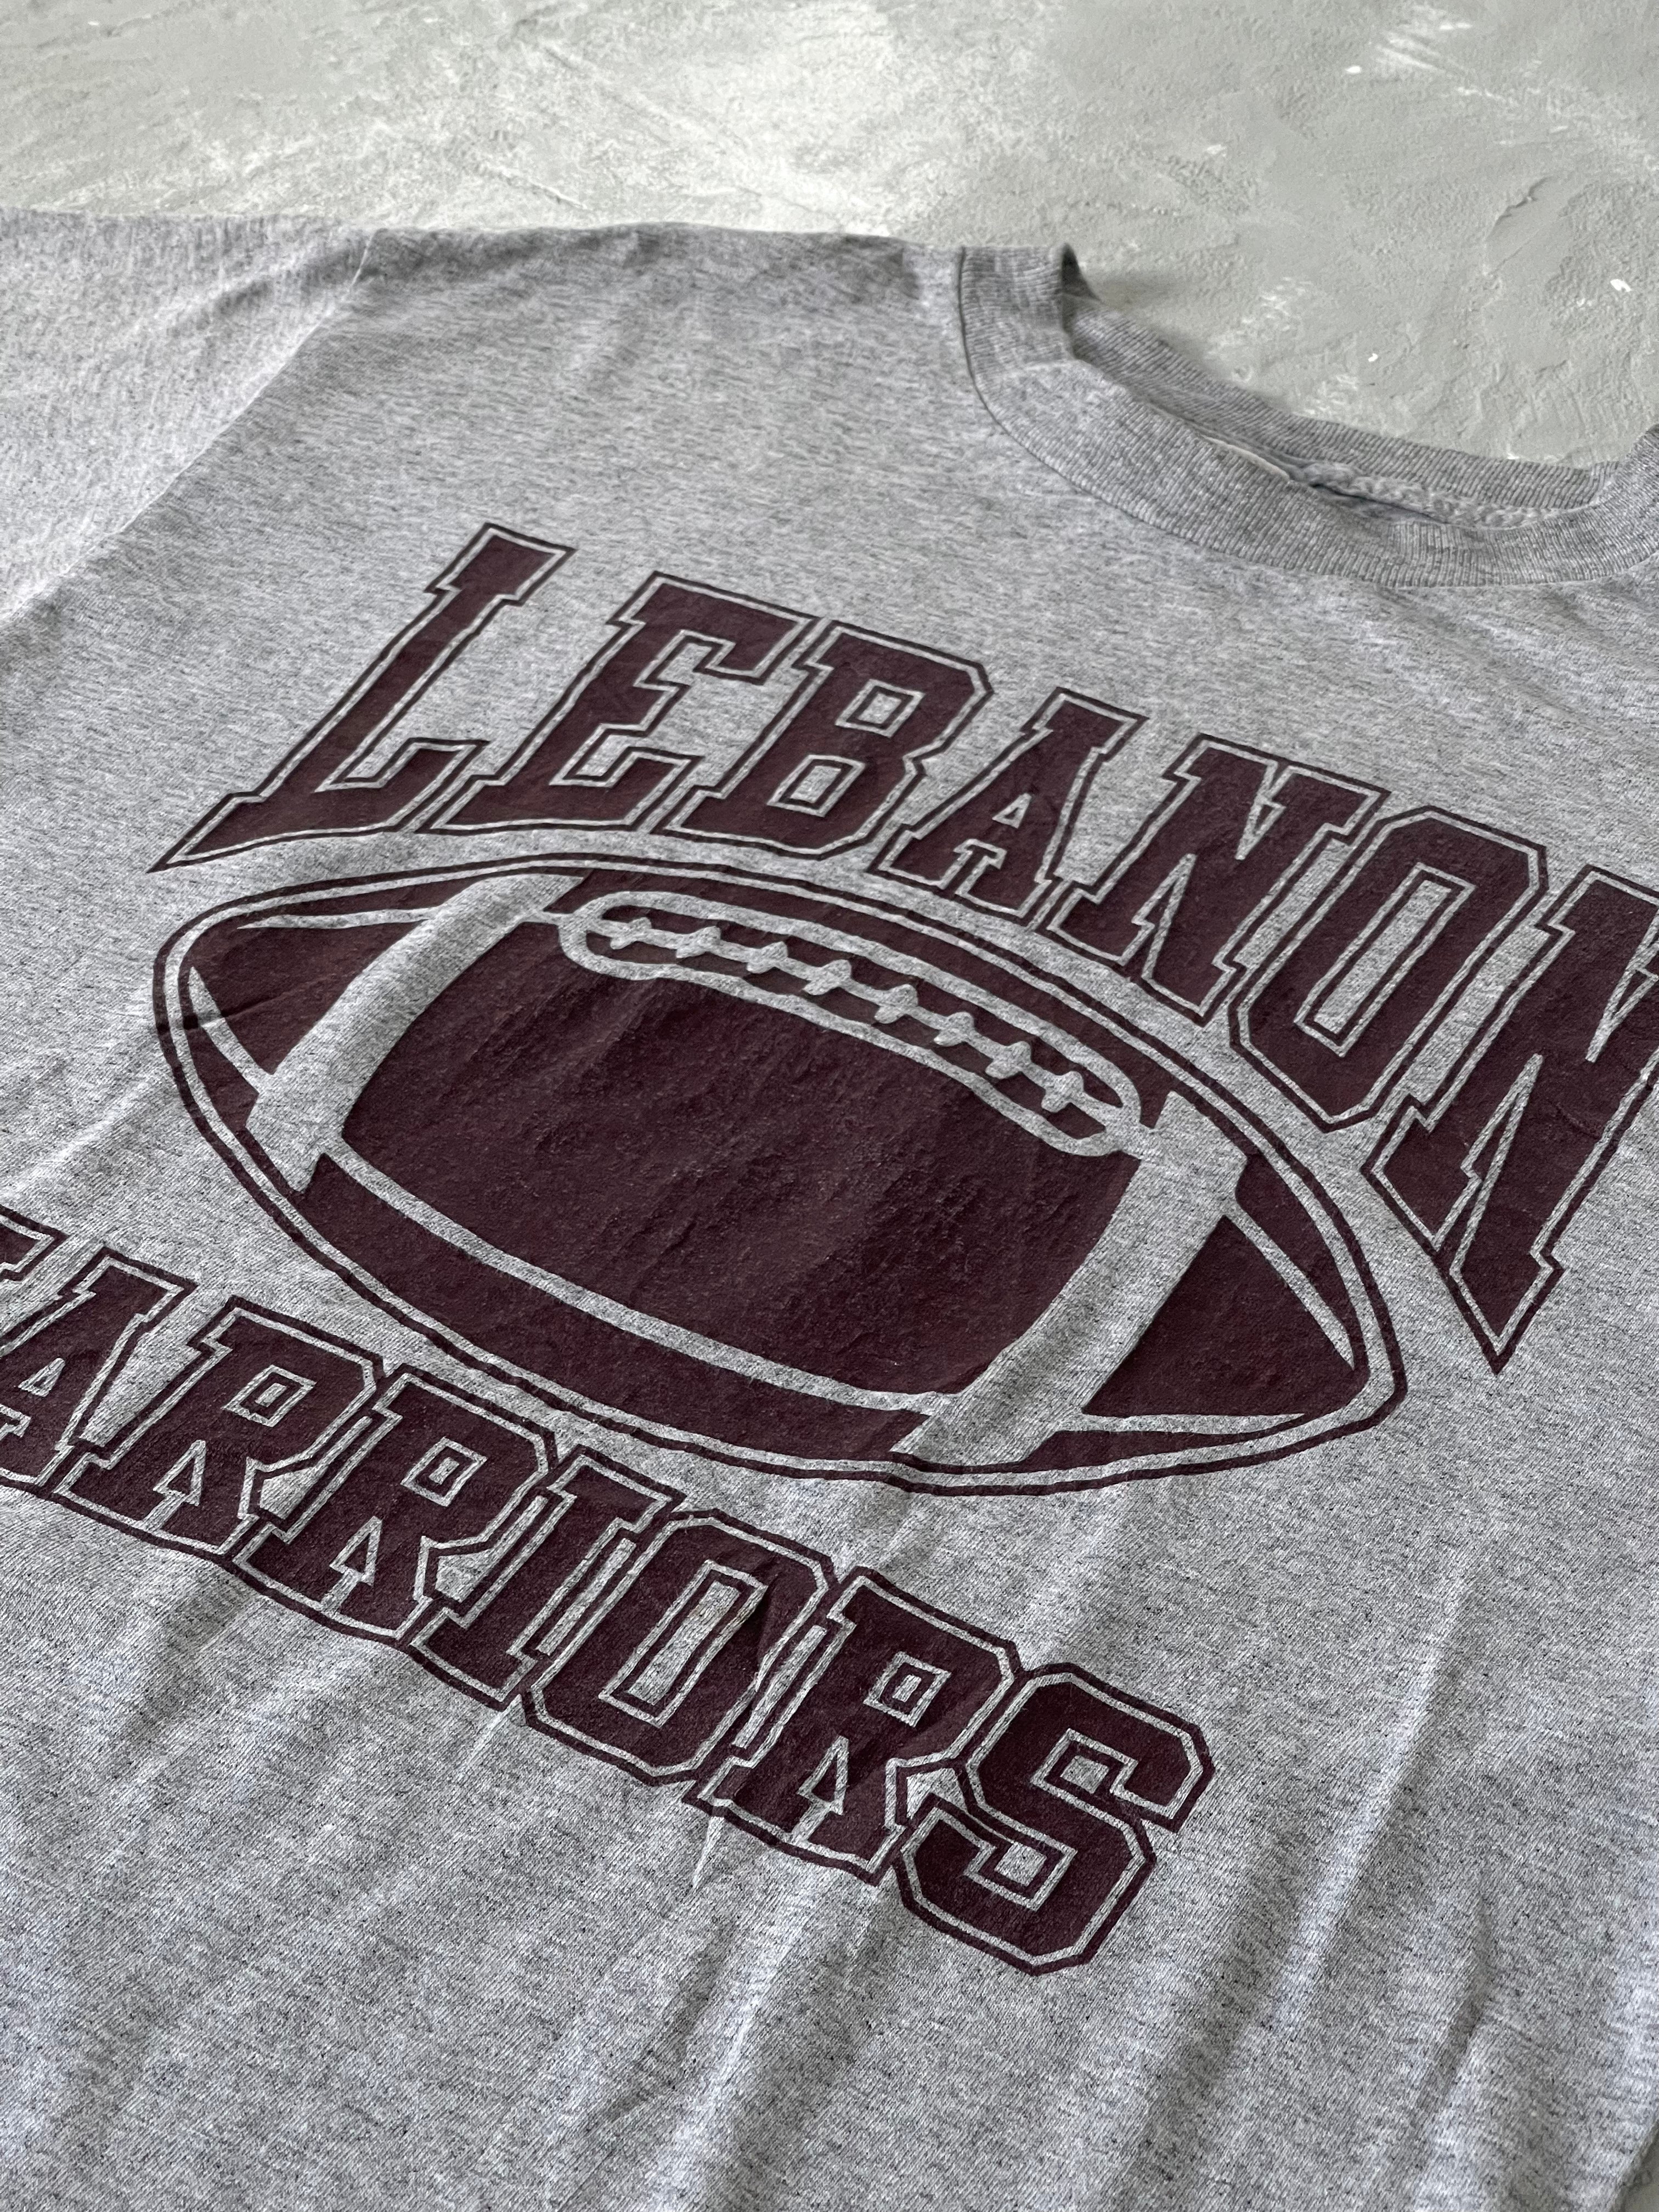 Lebanon Warriors Tee